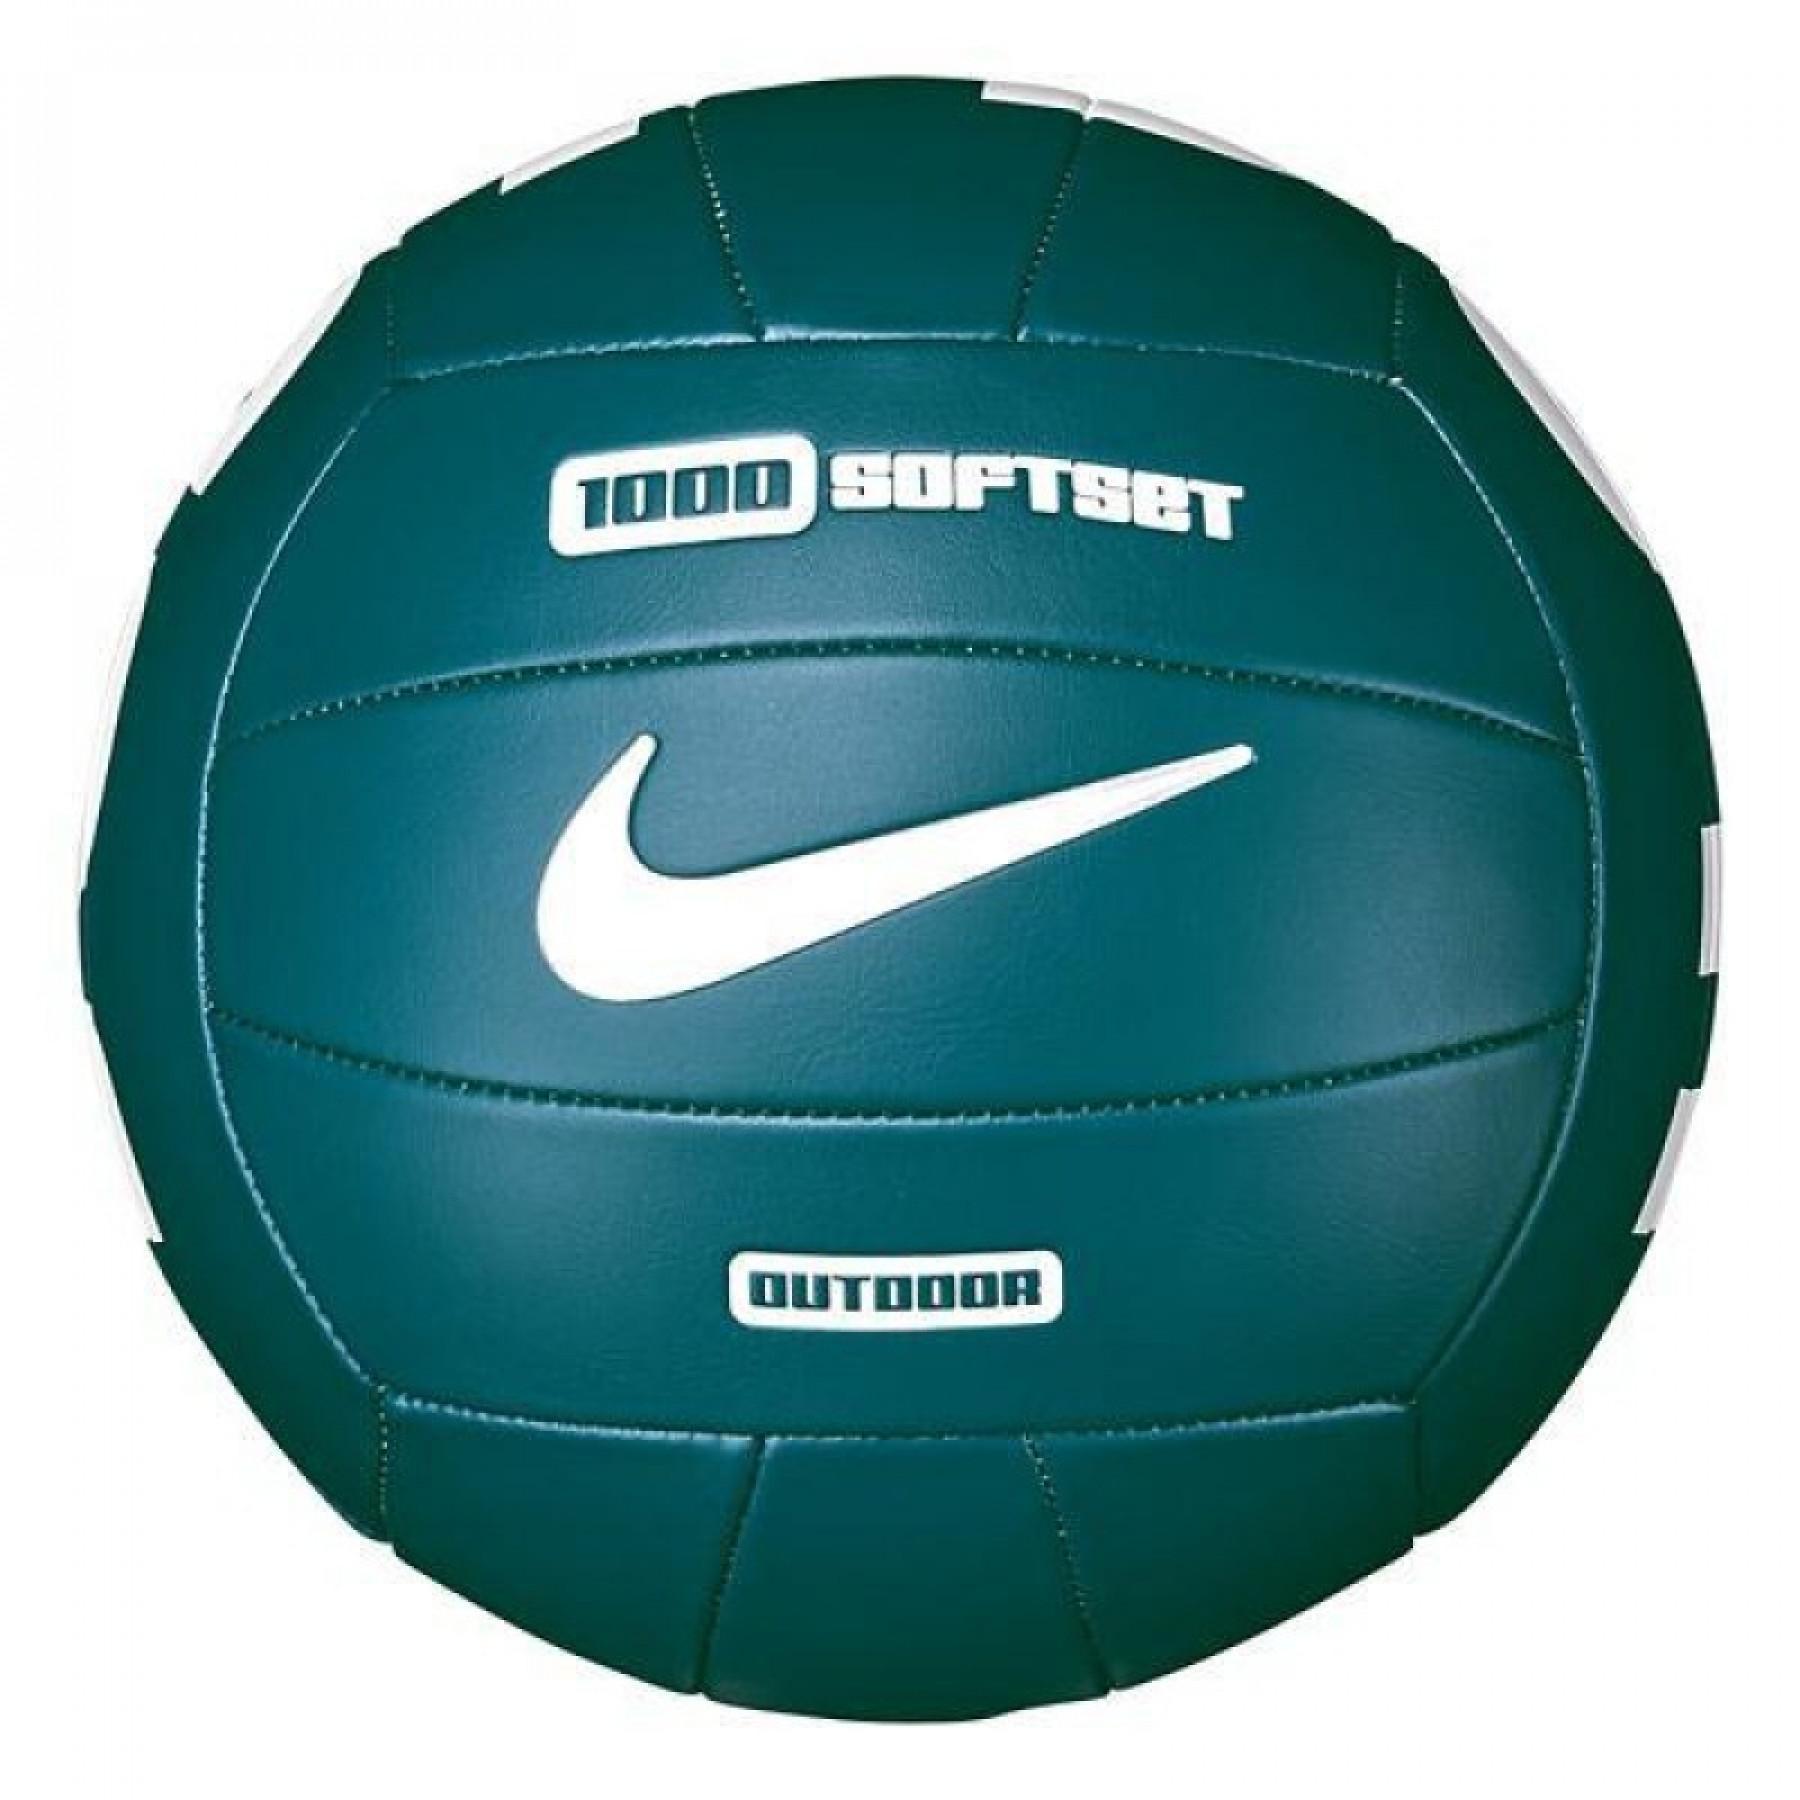 Conjunto de 3 balões Nike 1000 softset outdoor 